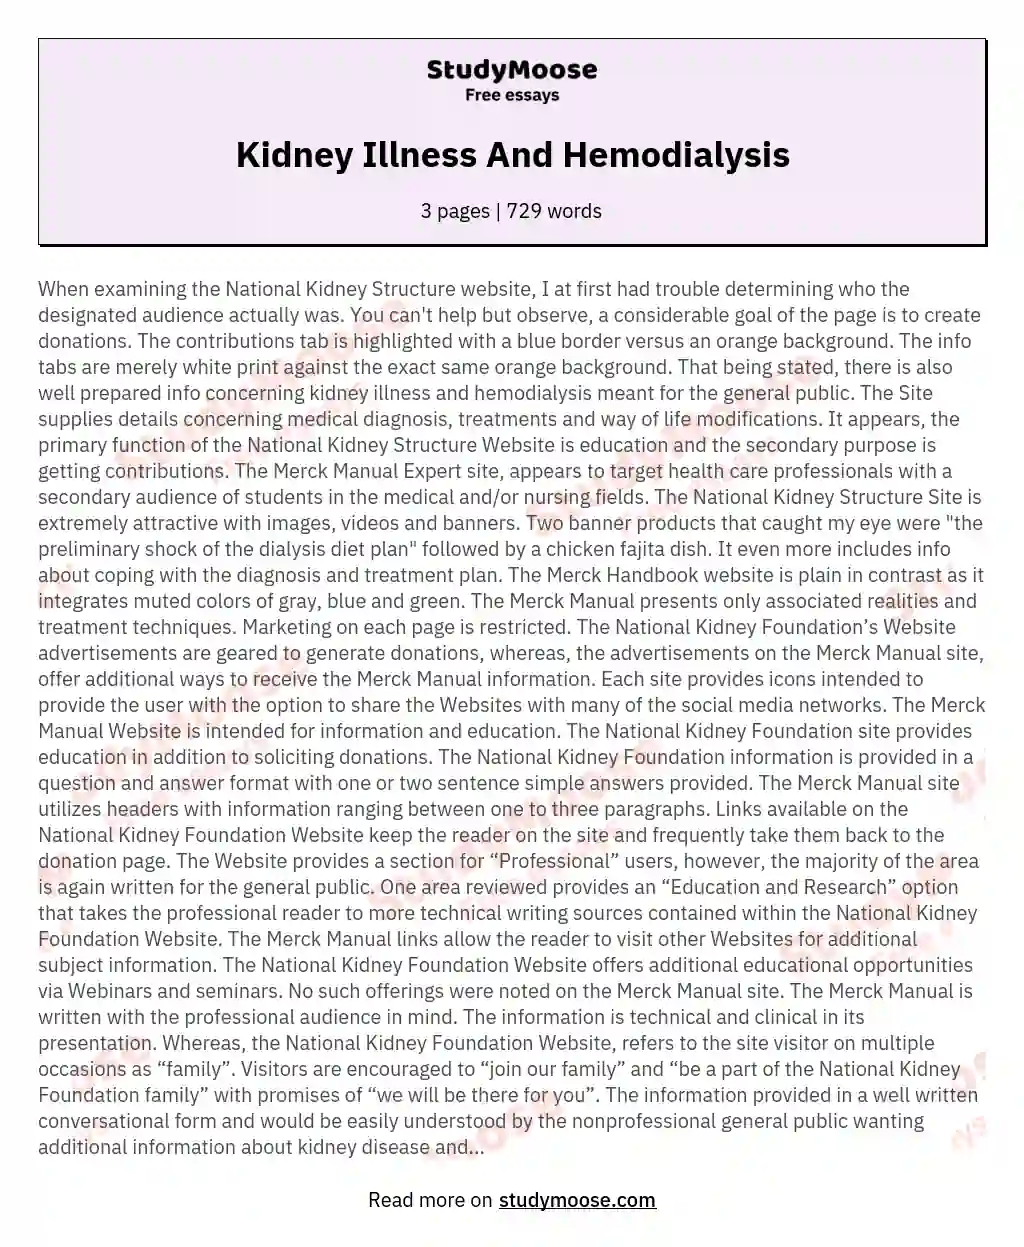 Kidney Illness And Hemodialysis essay